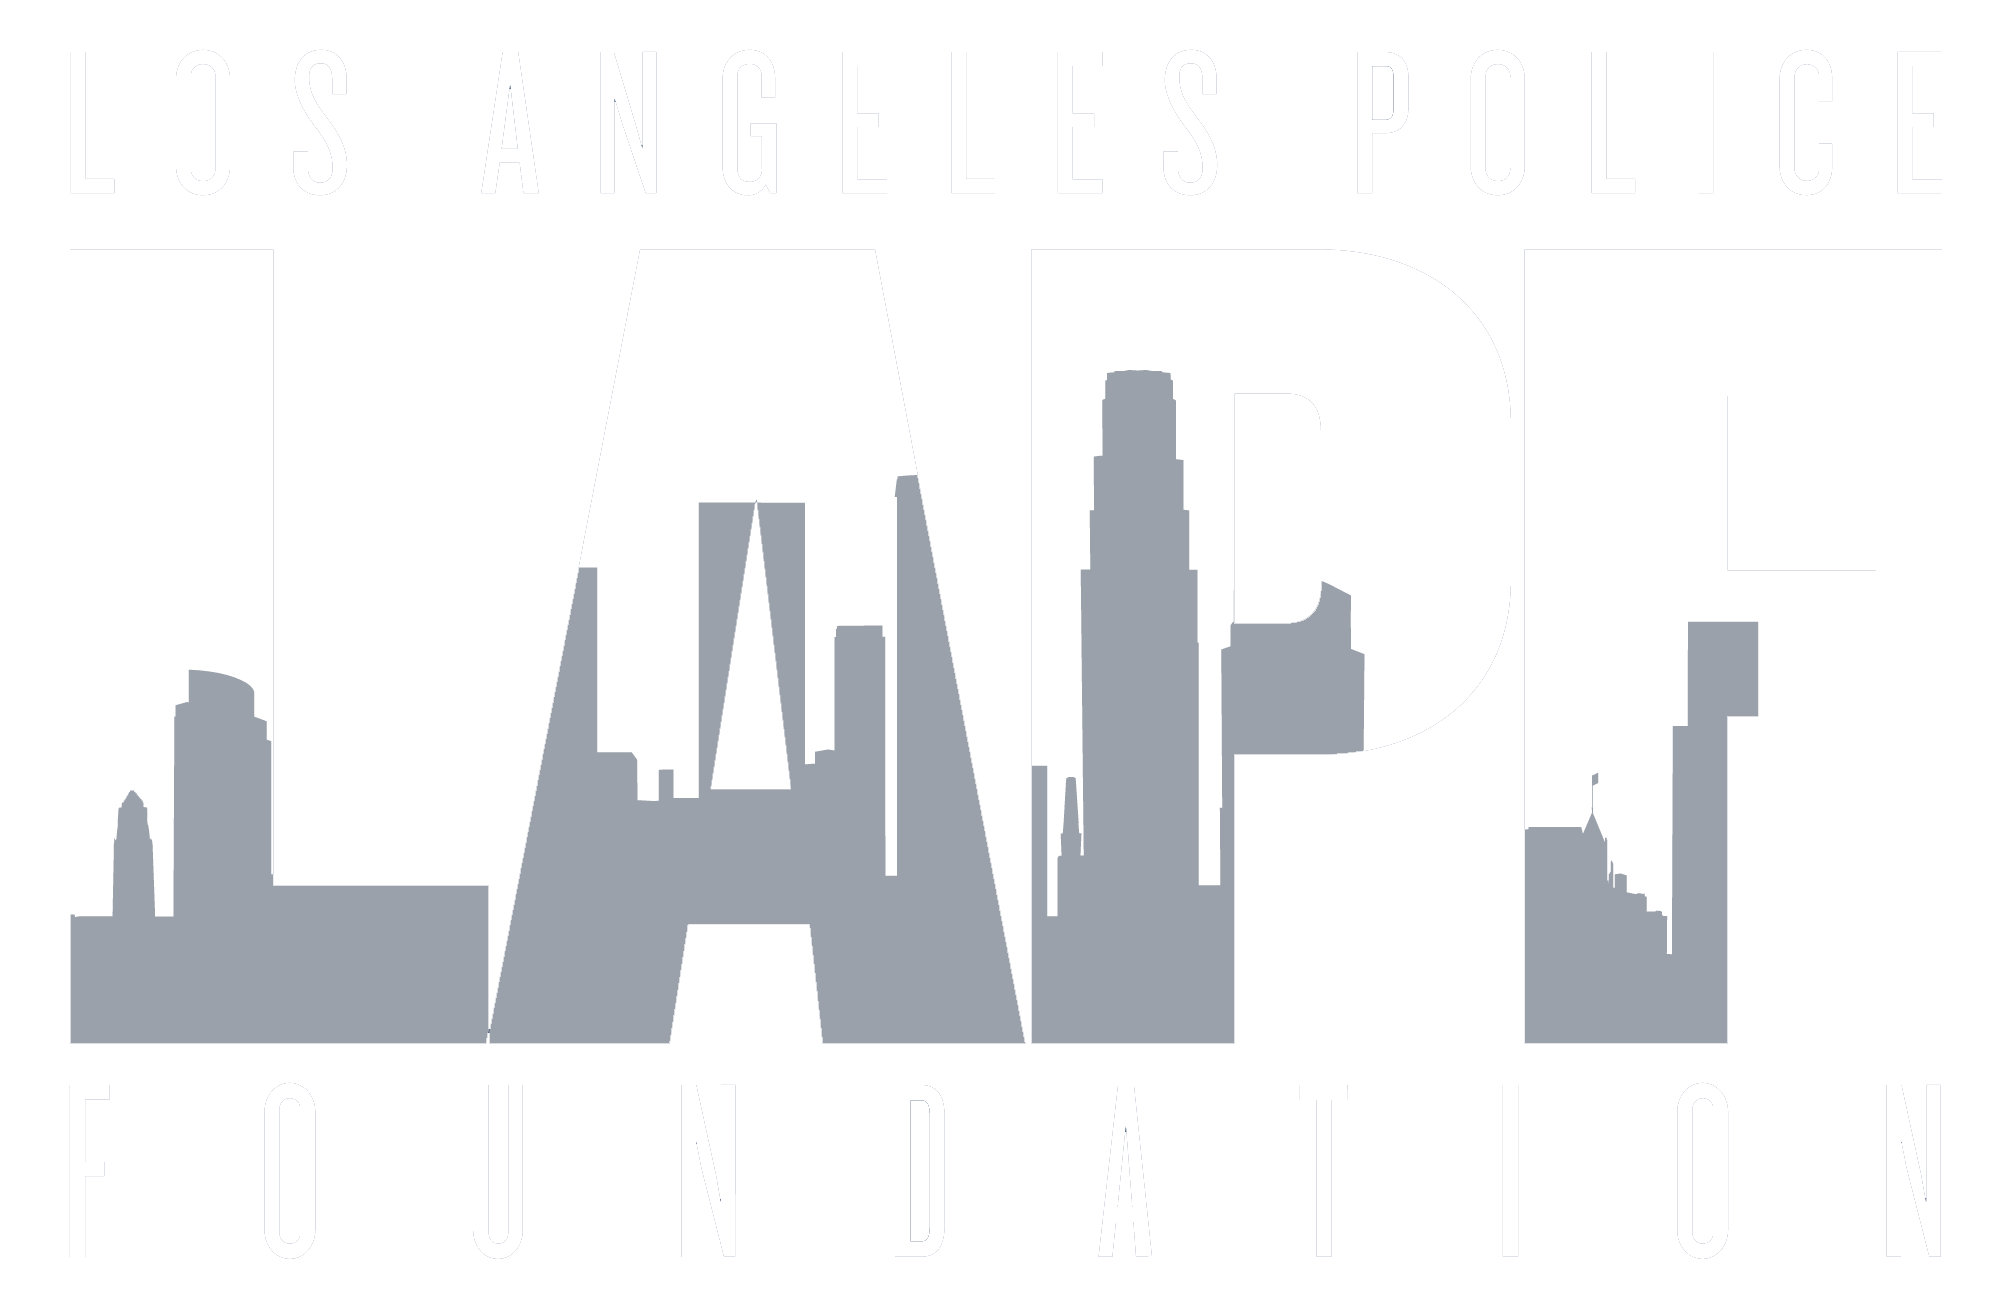 Los Angeles Police Foundation (LAPF) logo